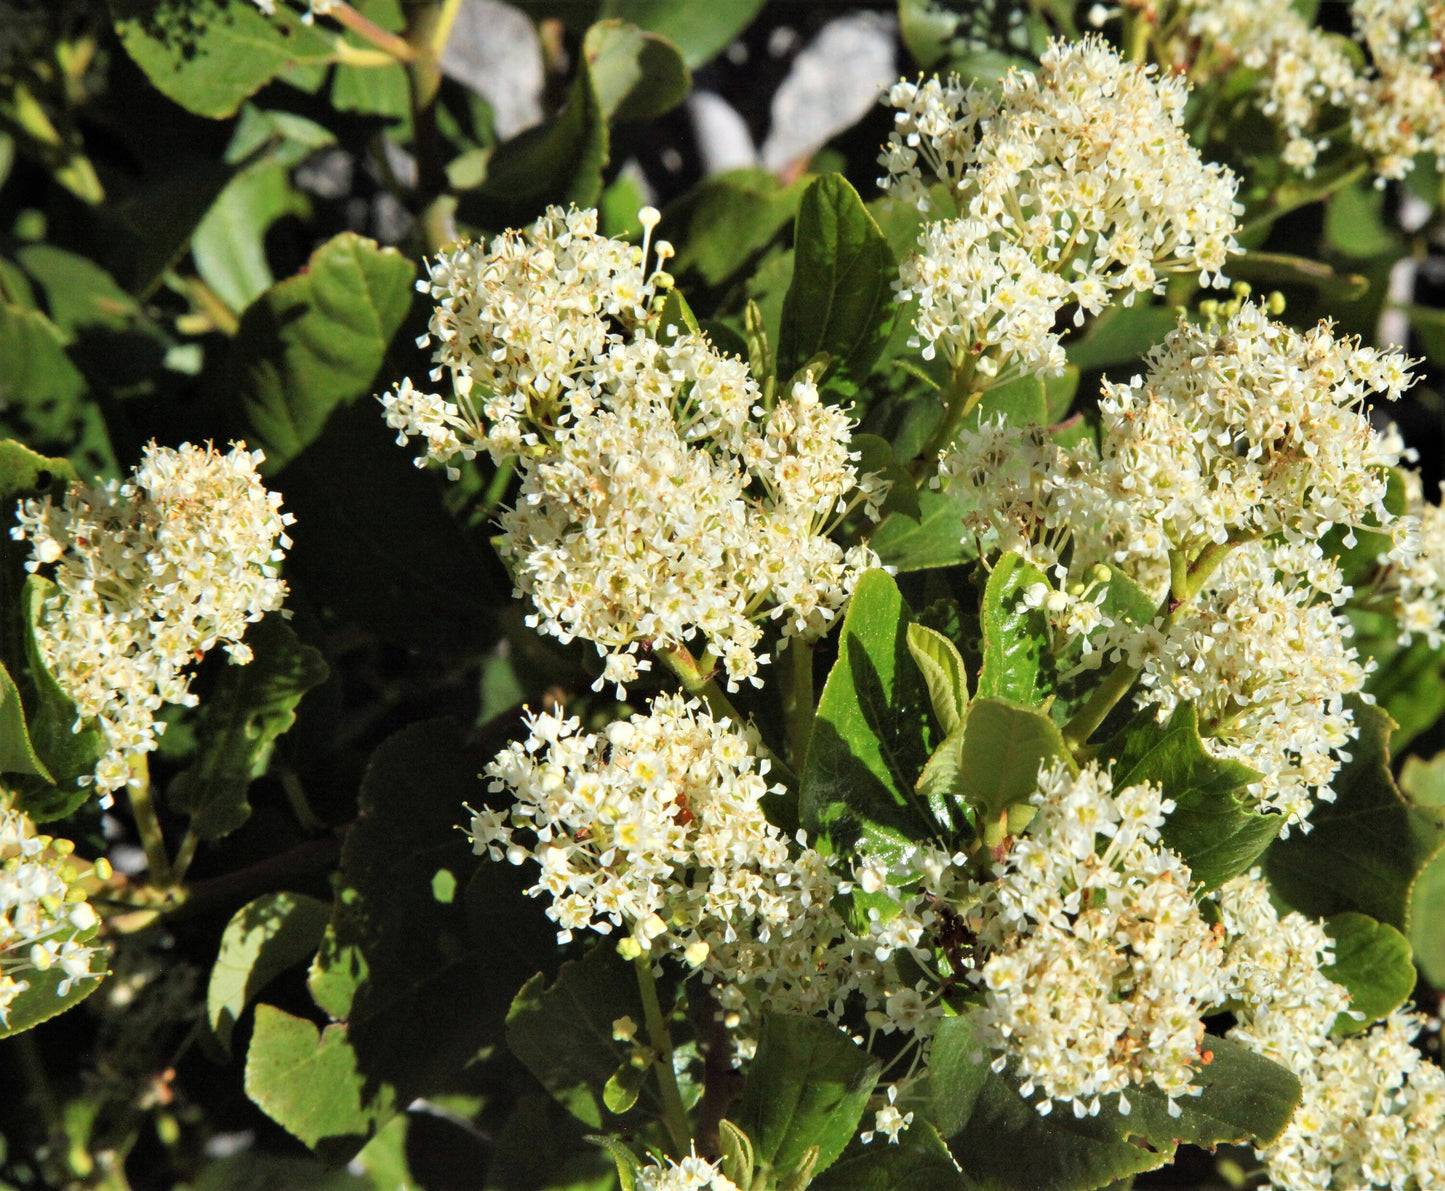 20 White SNOWBRUSH Ceanothus Velutinus aka Mountain Balm or Buckbrush Evergreen Native Flower Shrub Seeds